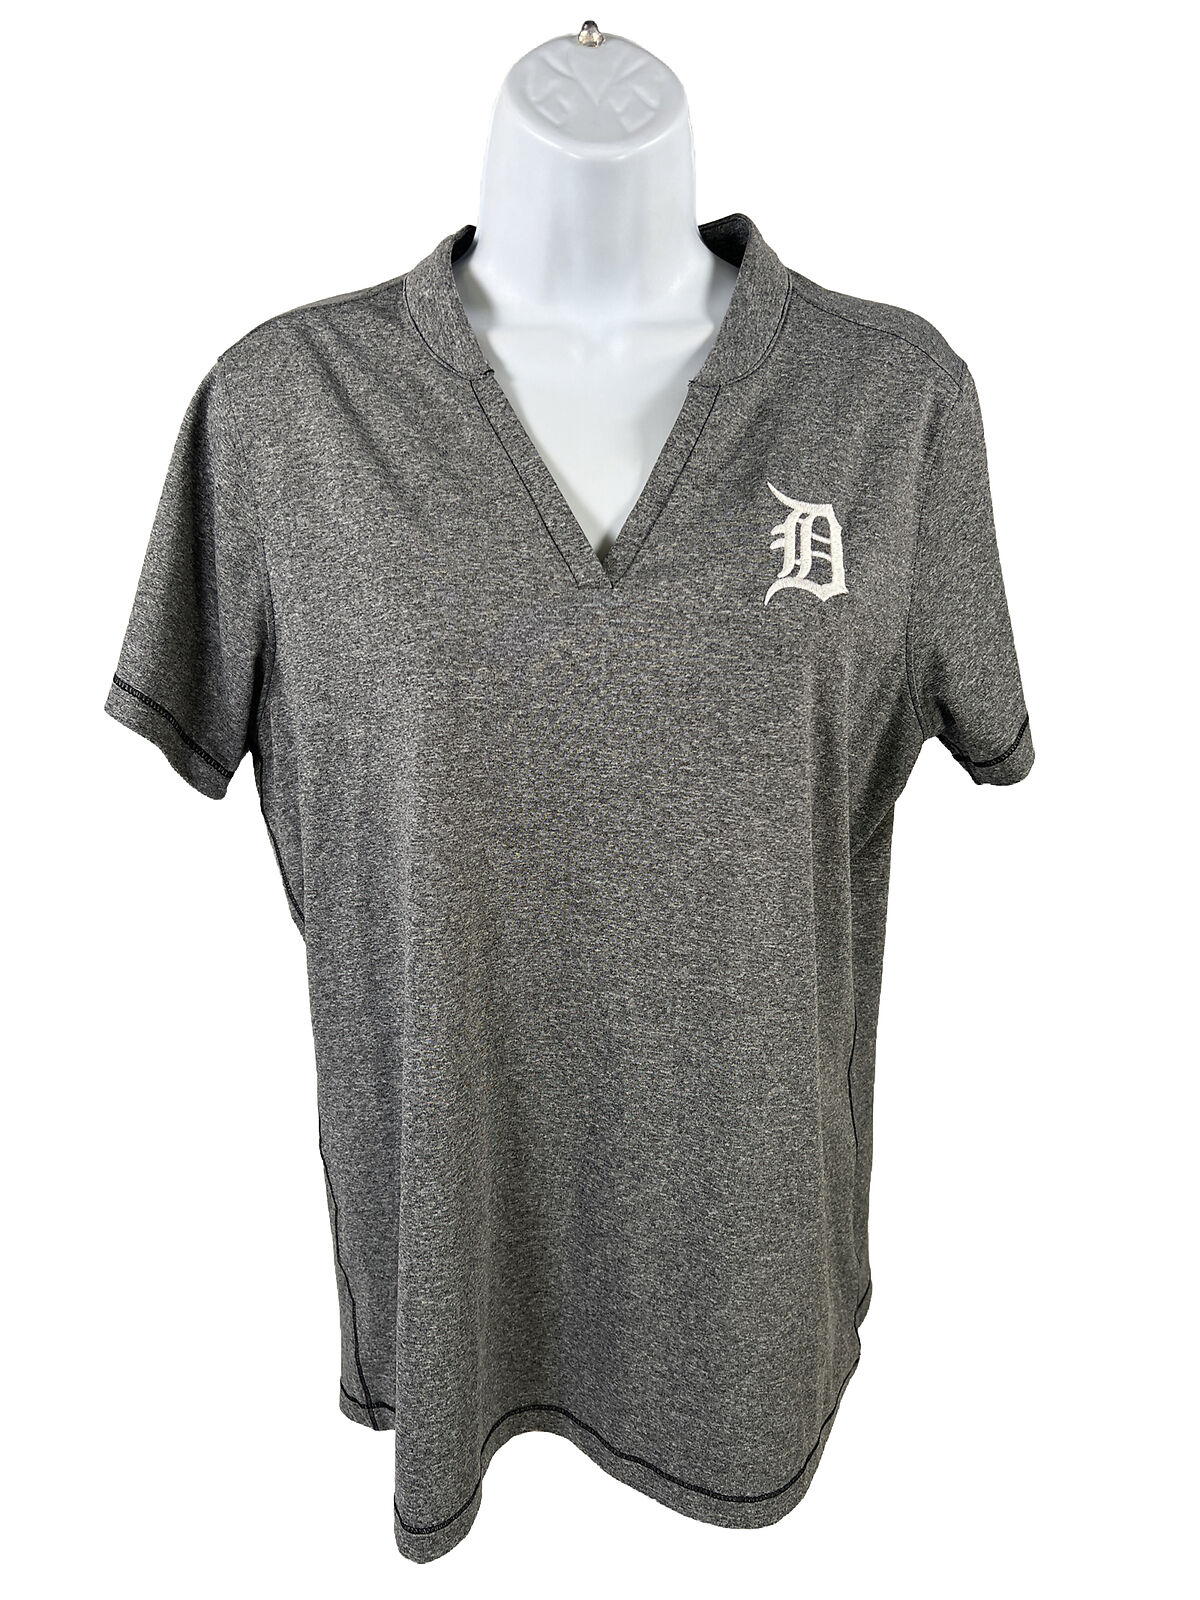 Cutter and Buck Camisa deportiva de manga corta gris Detroit Tigers para mujer -L